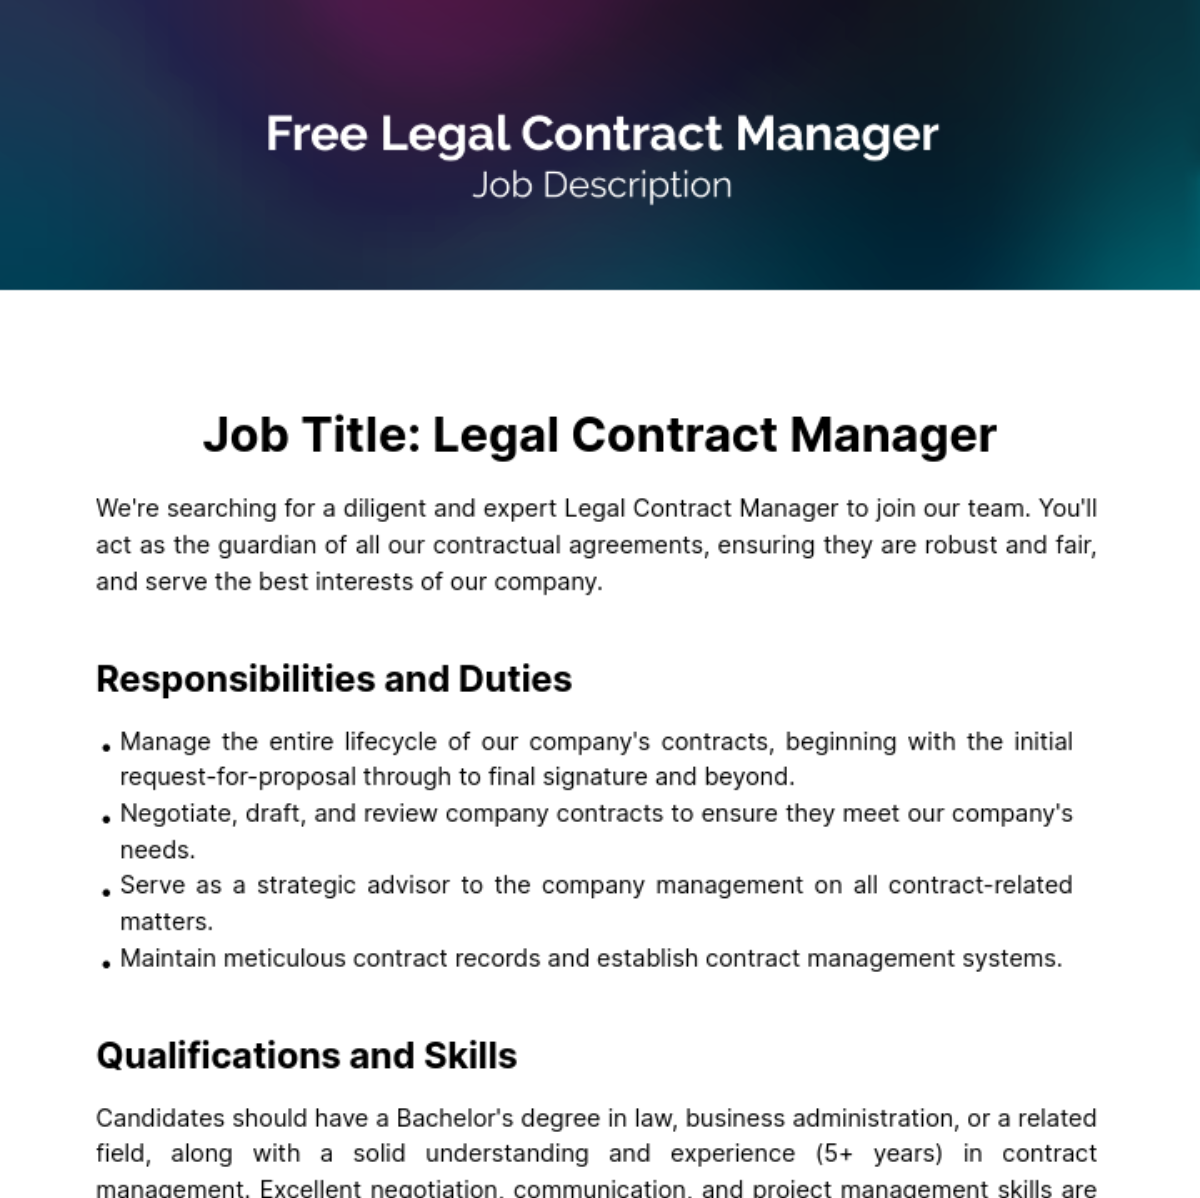 Free Legal Contract Manager Job Description Template